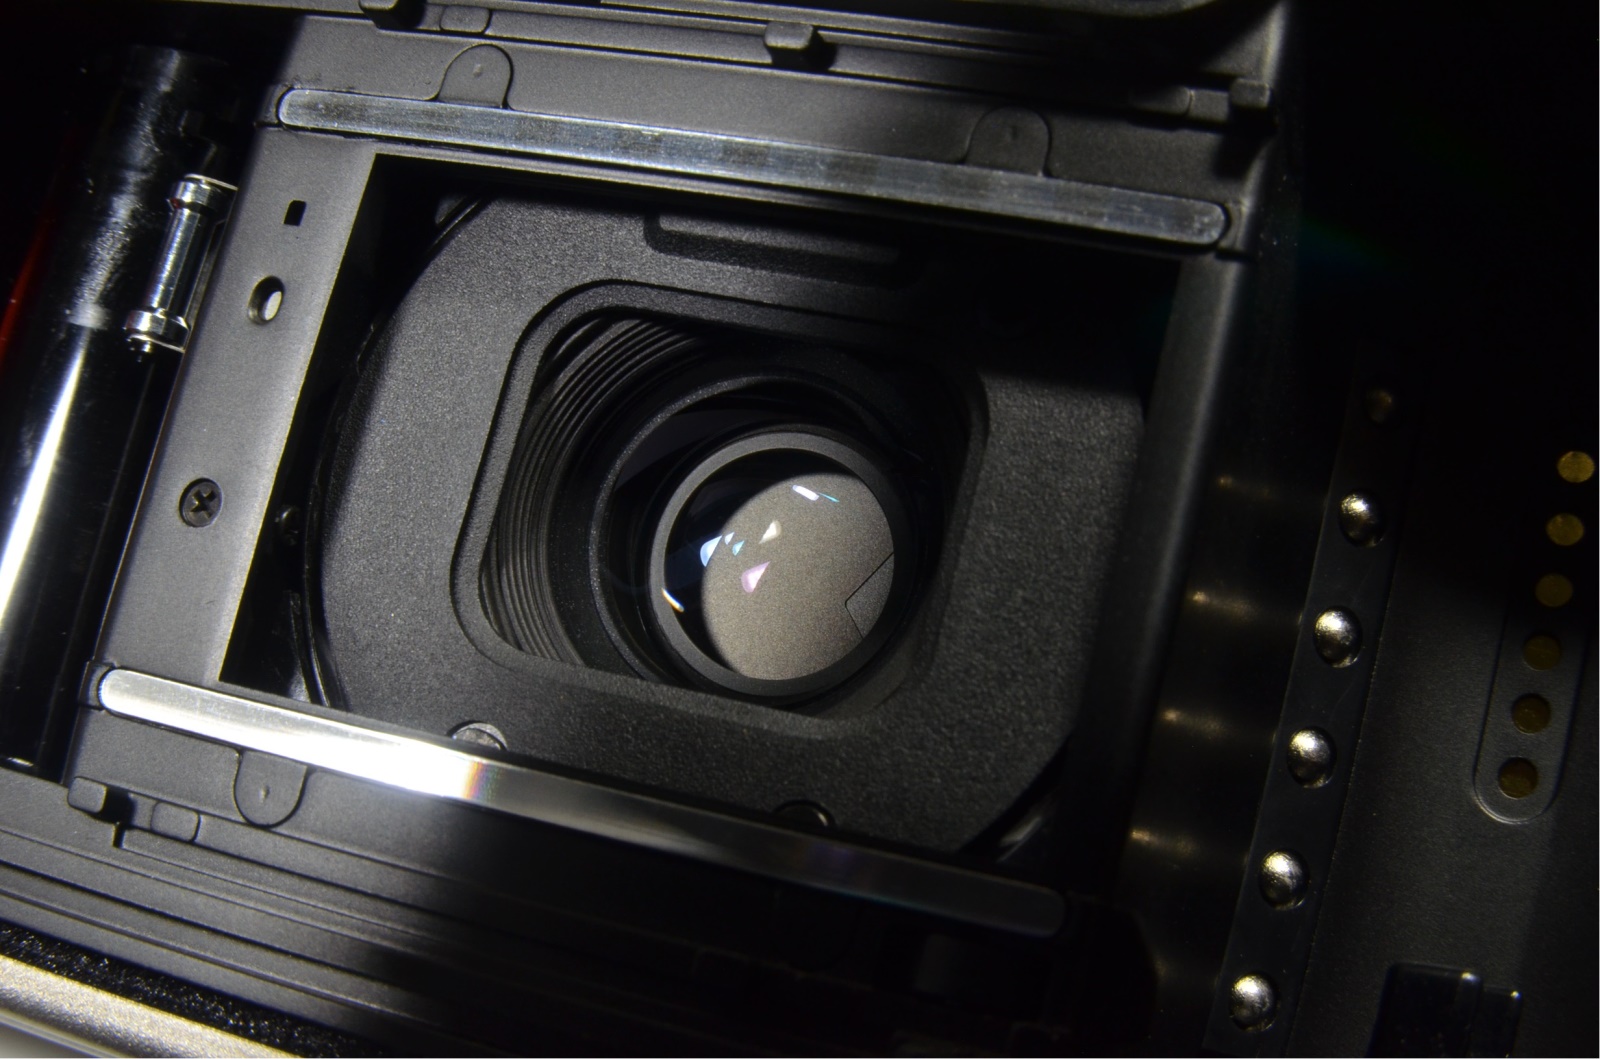 nikon 35ti p&s film camera lens 35mm f2.8 from japan film tested